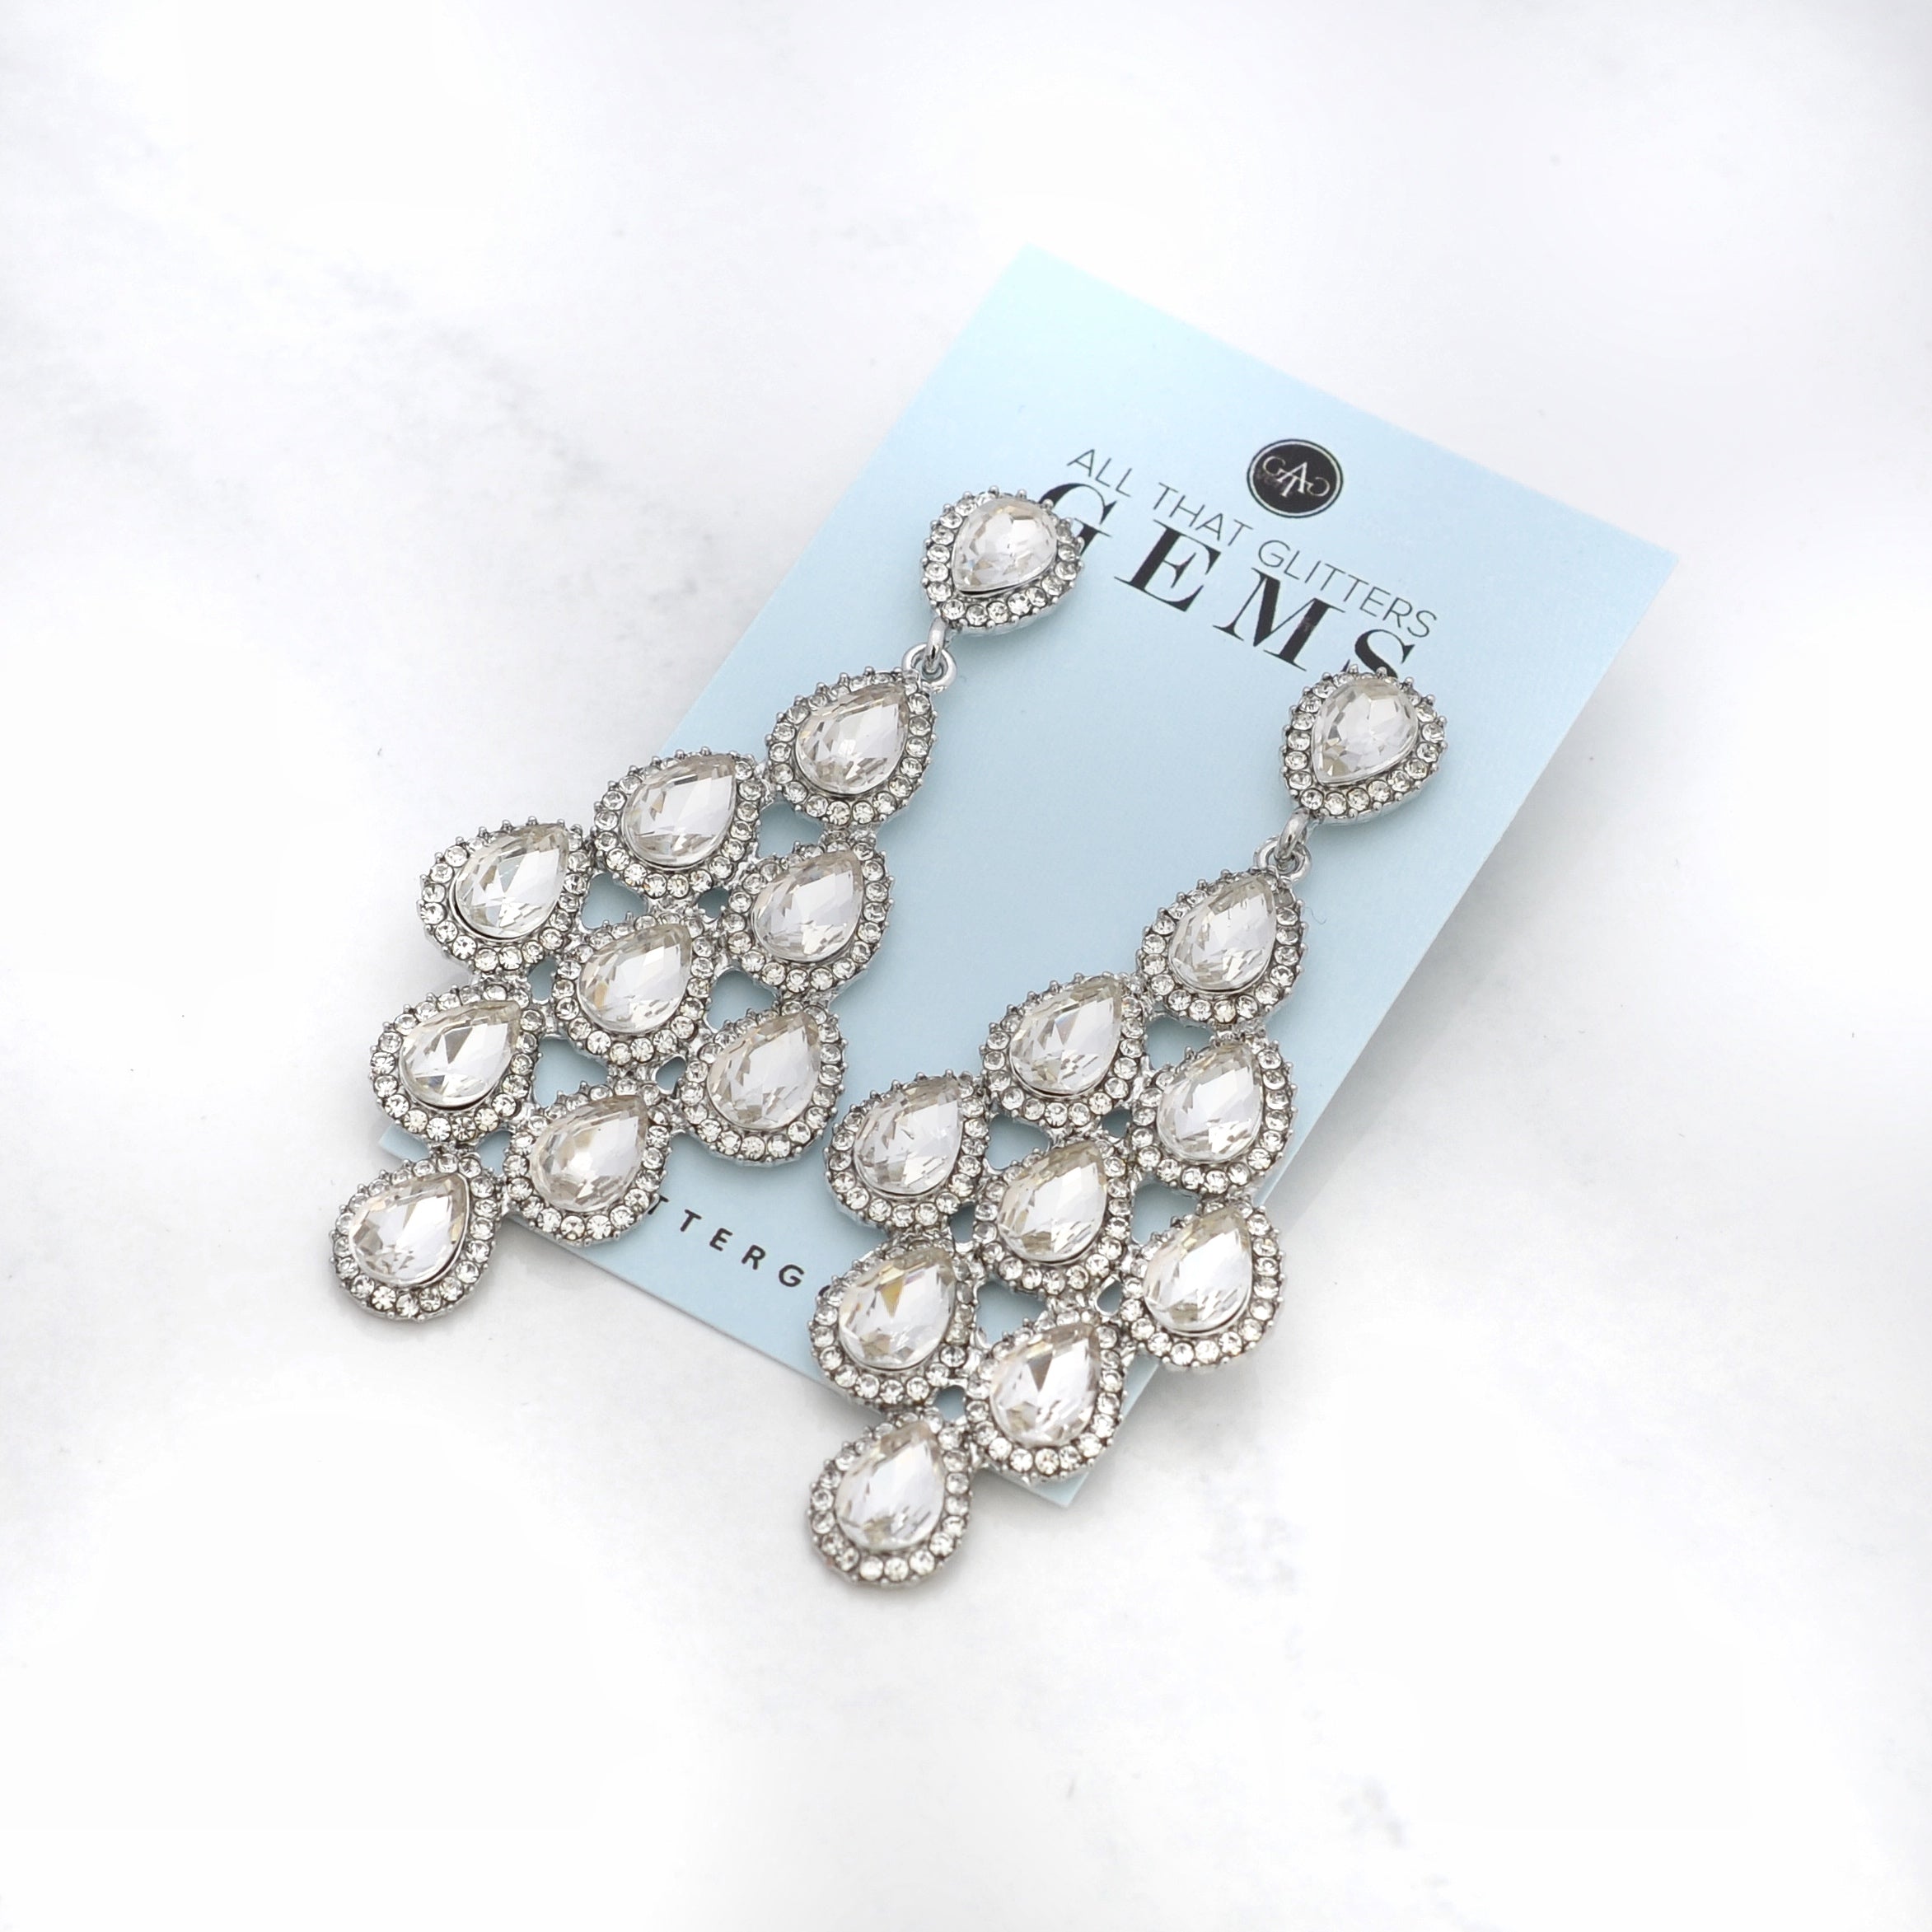 Safiyah - clear teardrop rhinestone earrings